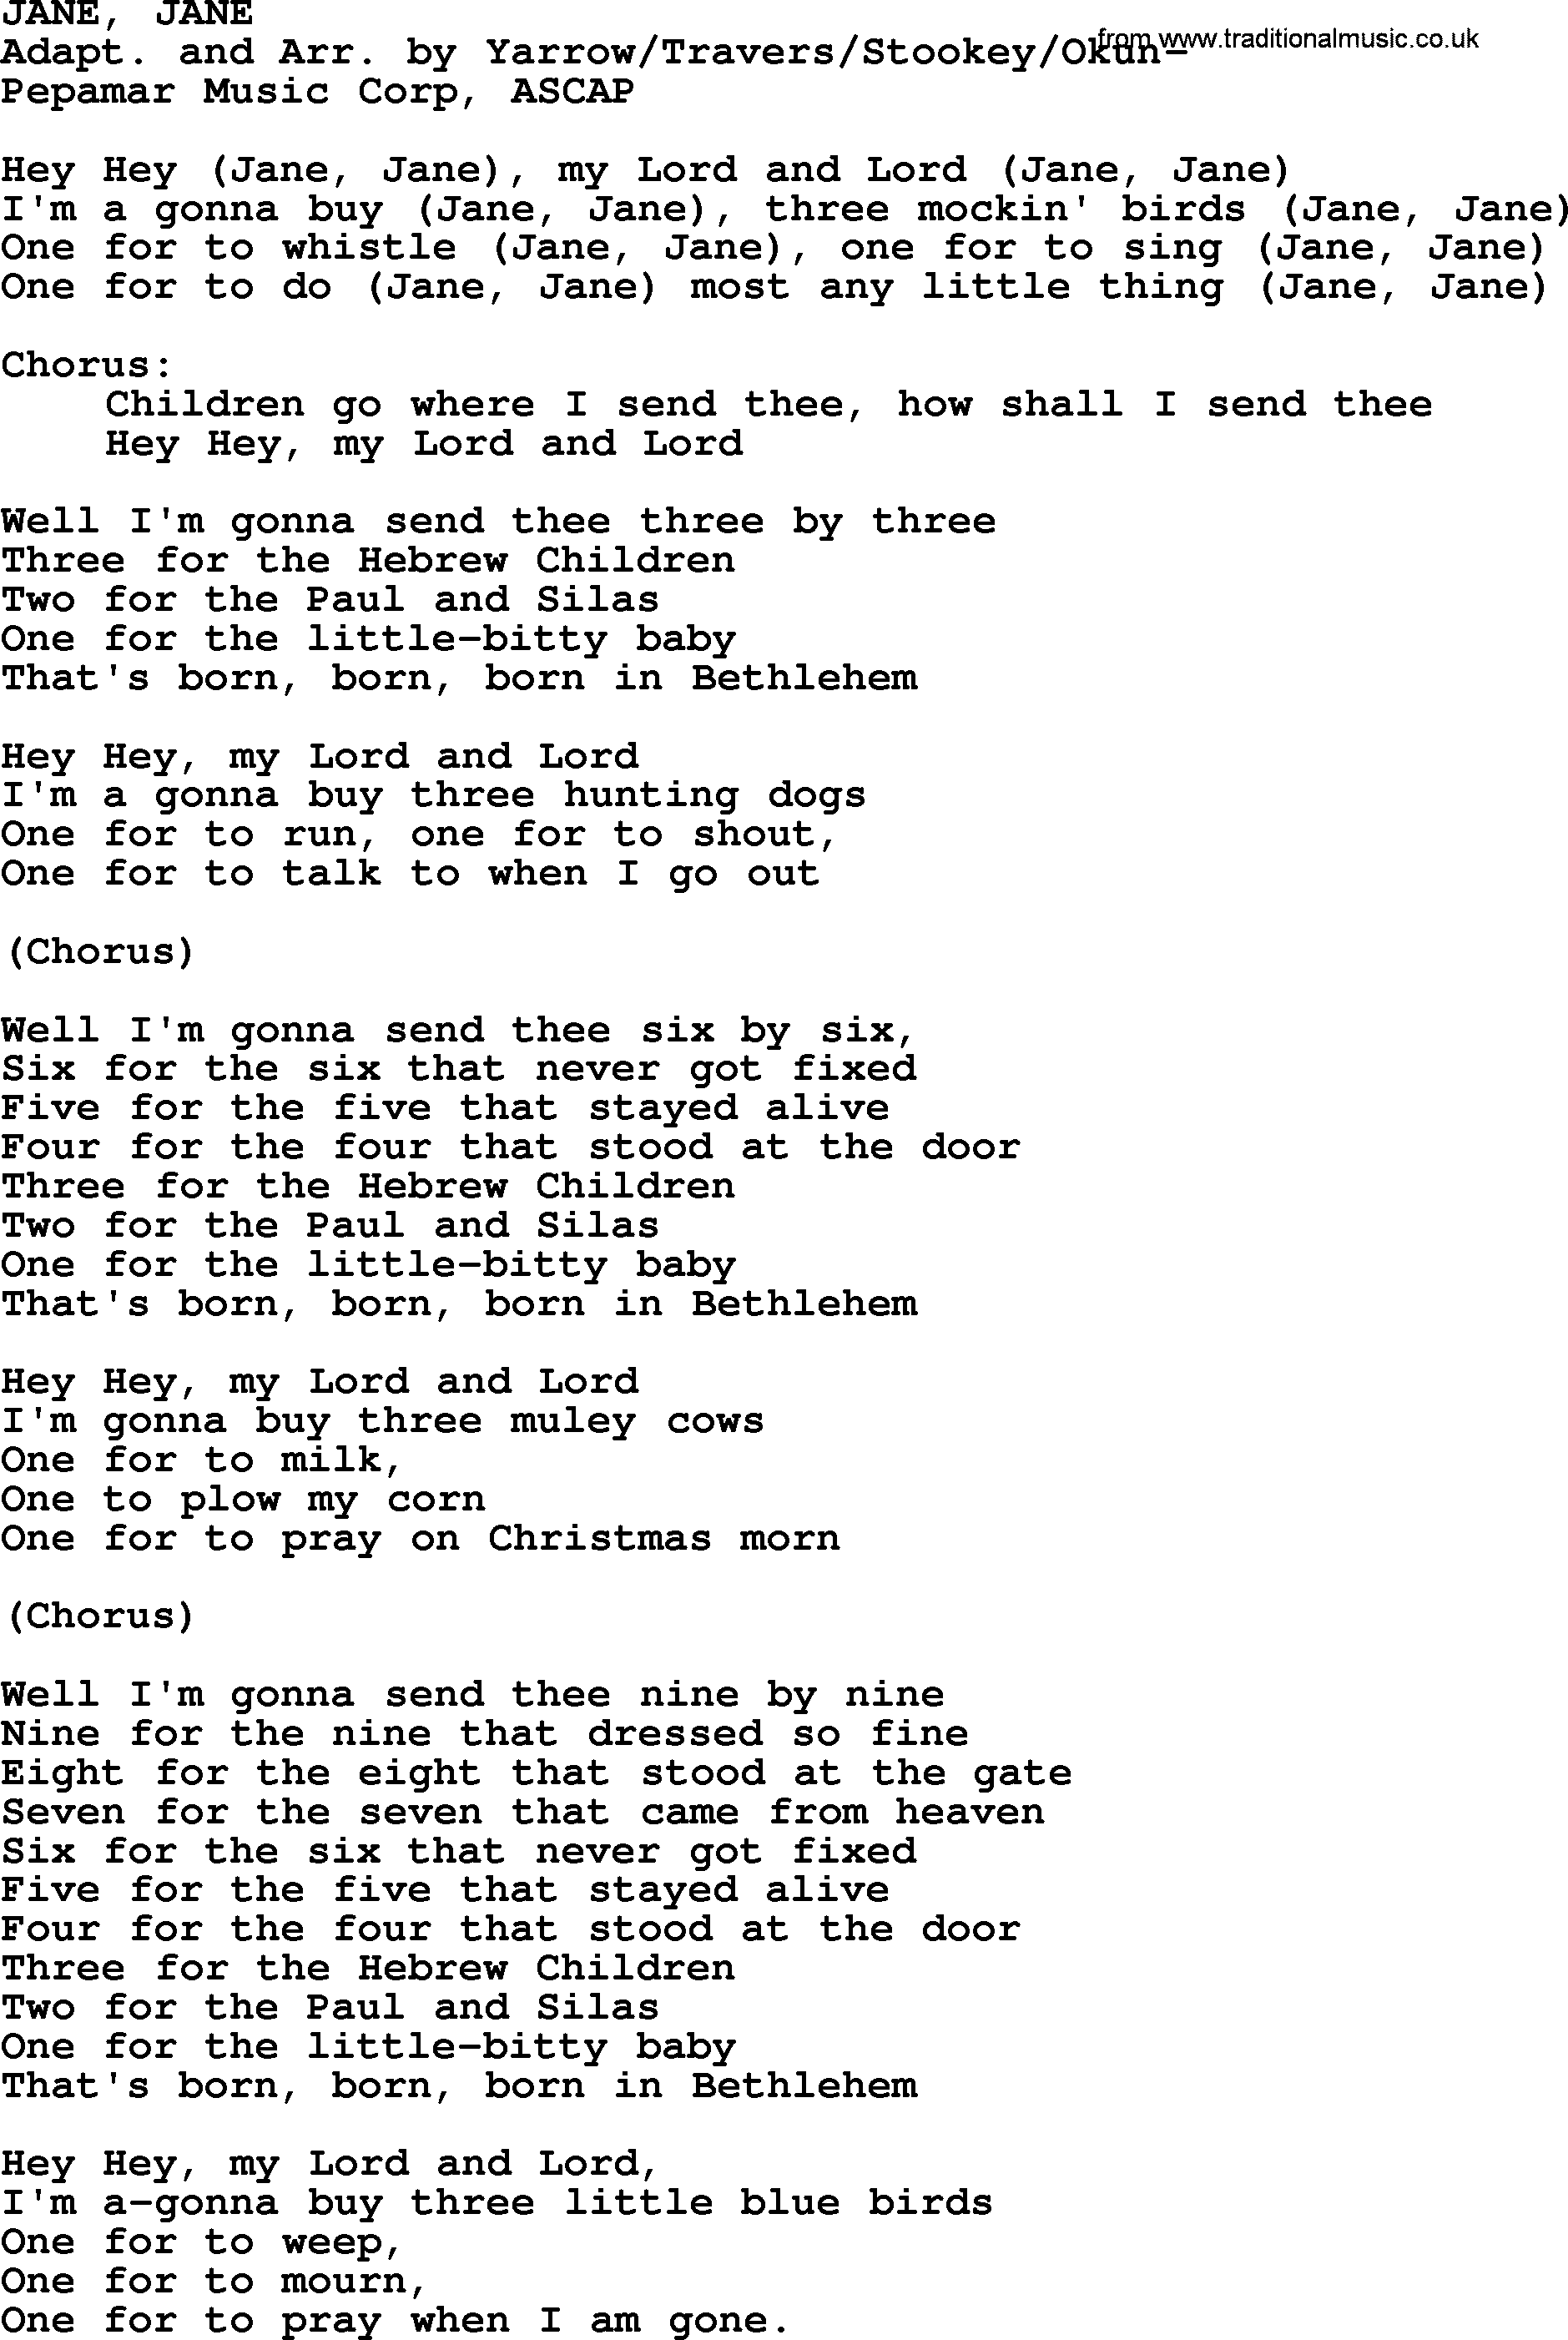 Peter, Paul and Mary song Jane, Jane lyrics